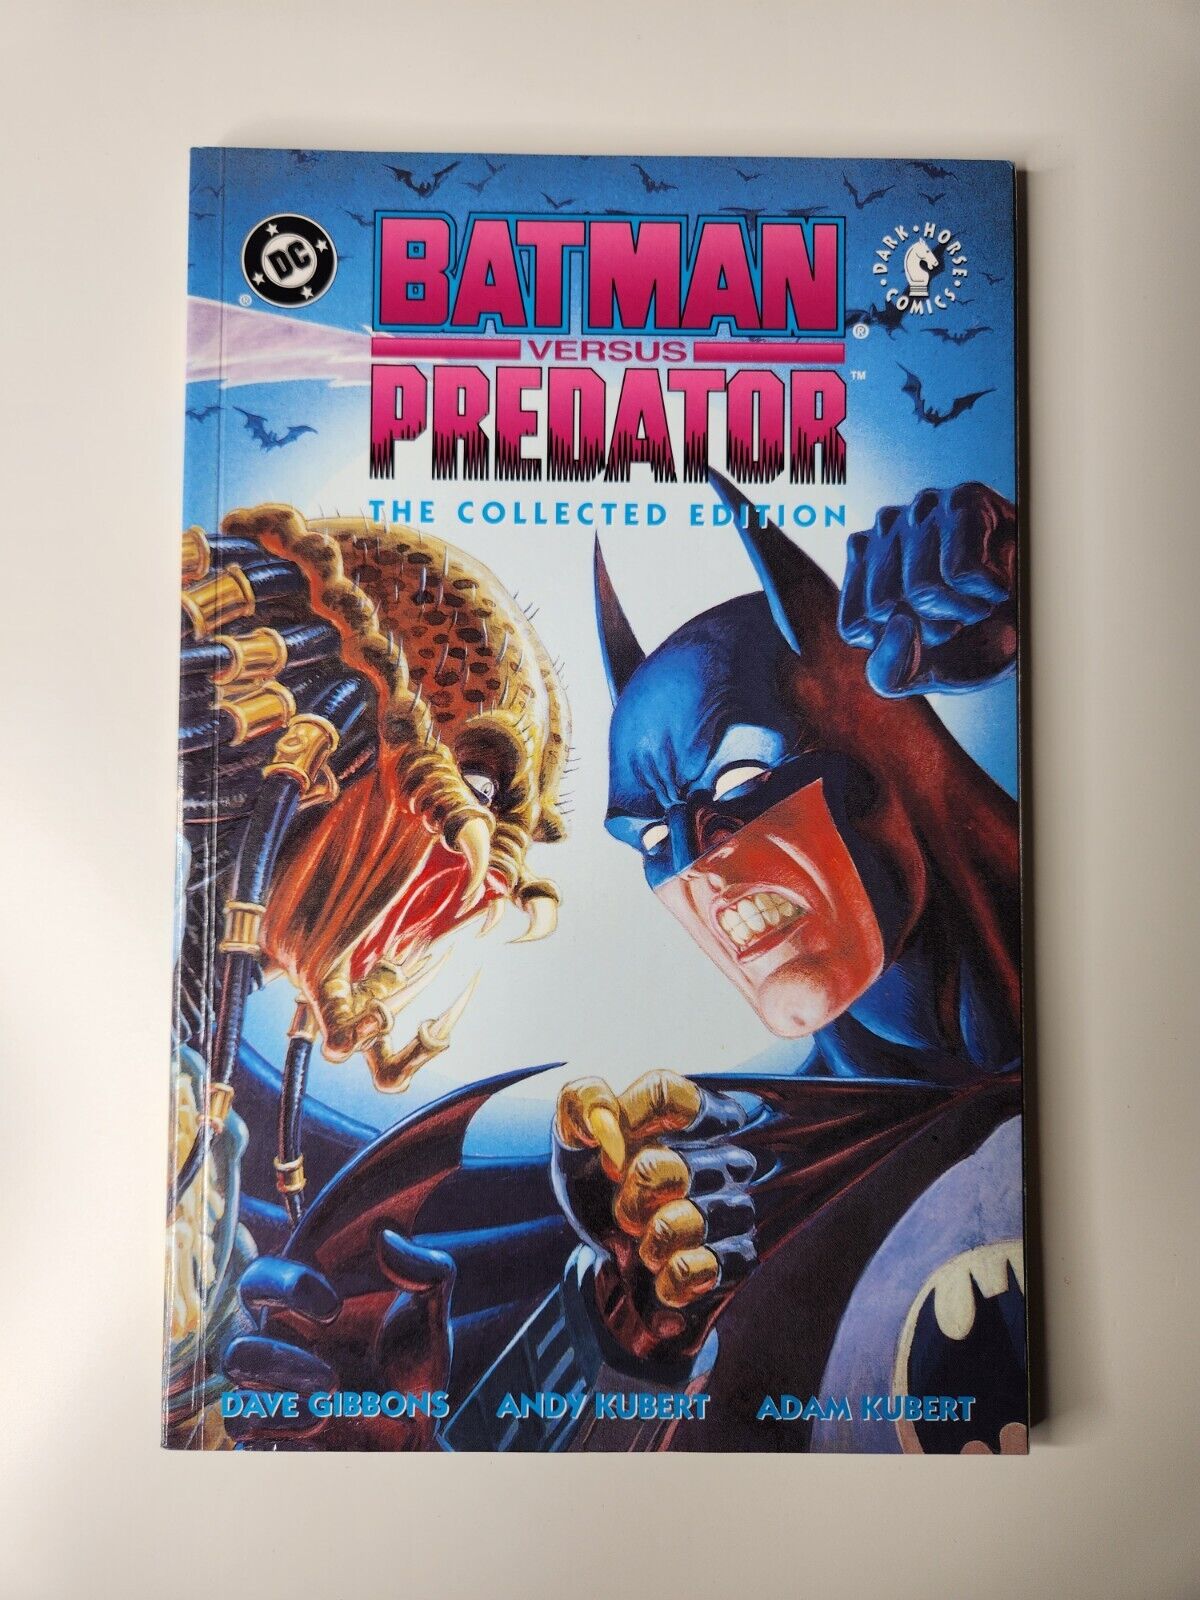 Batman versus Predator: The Collected Edition (DC Comics, 1993)